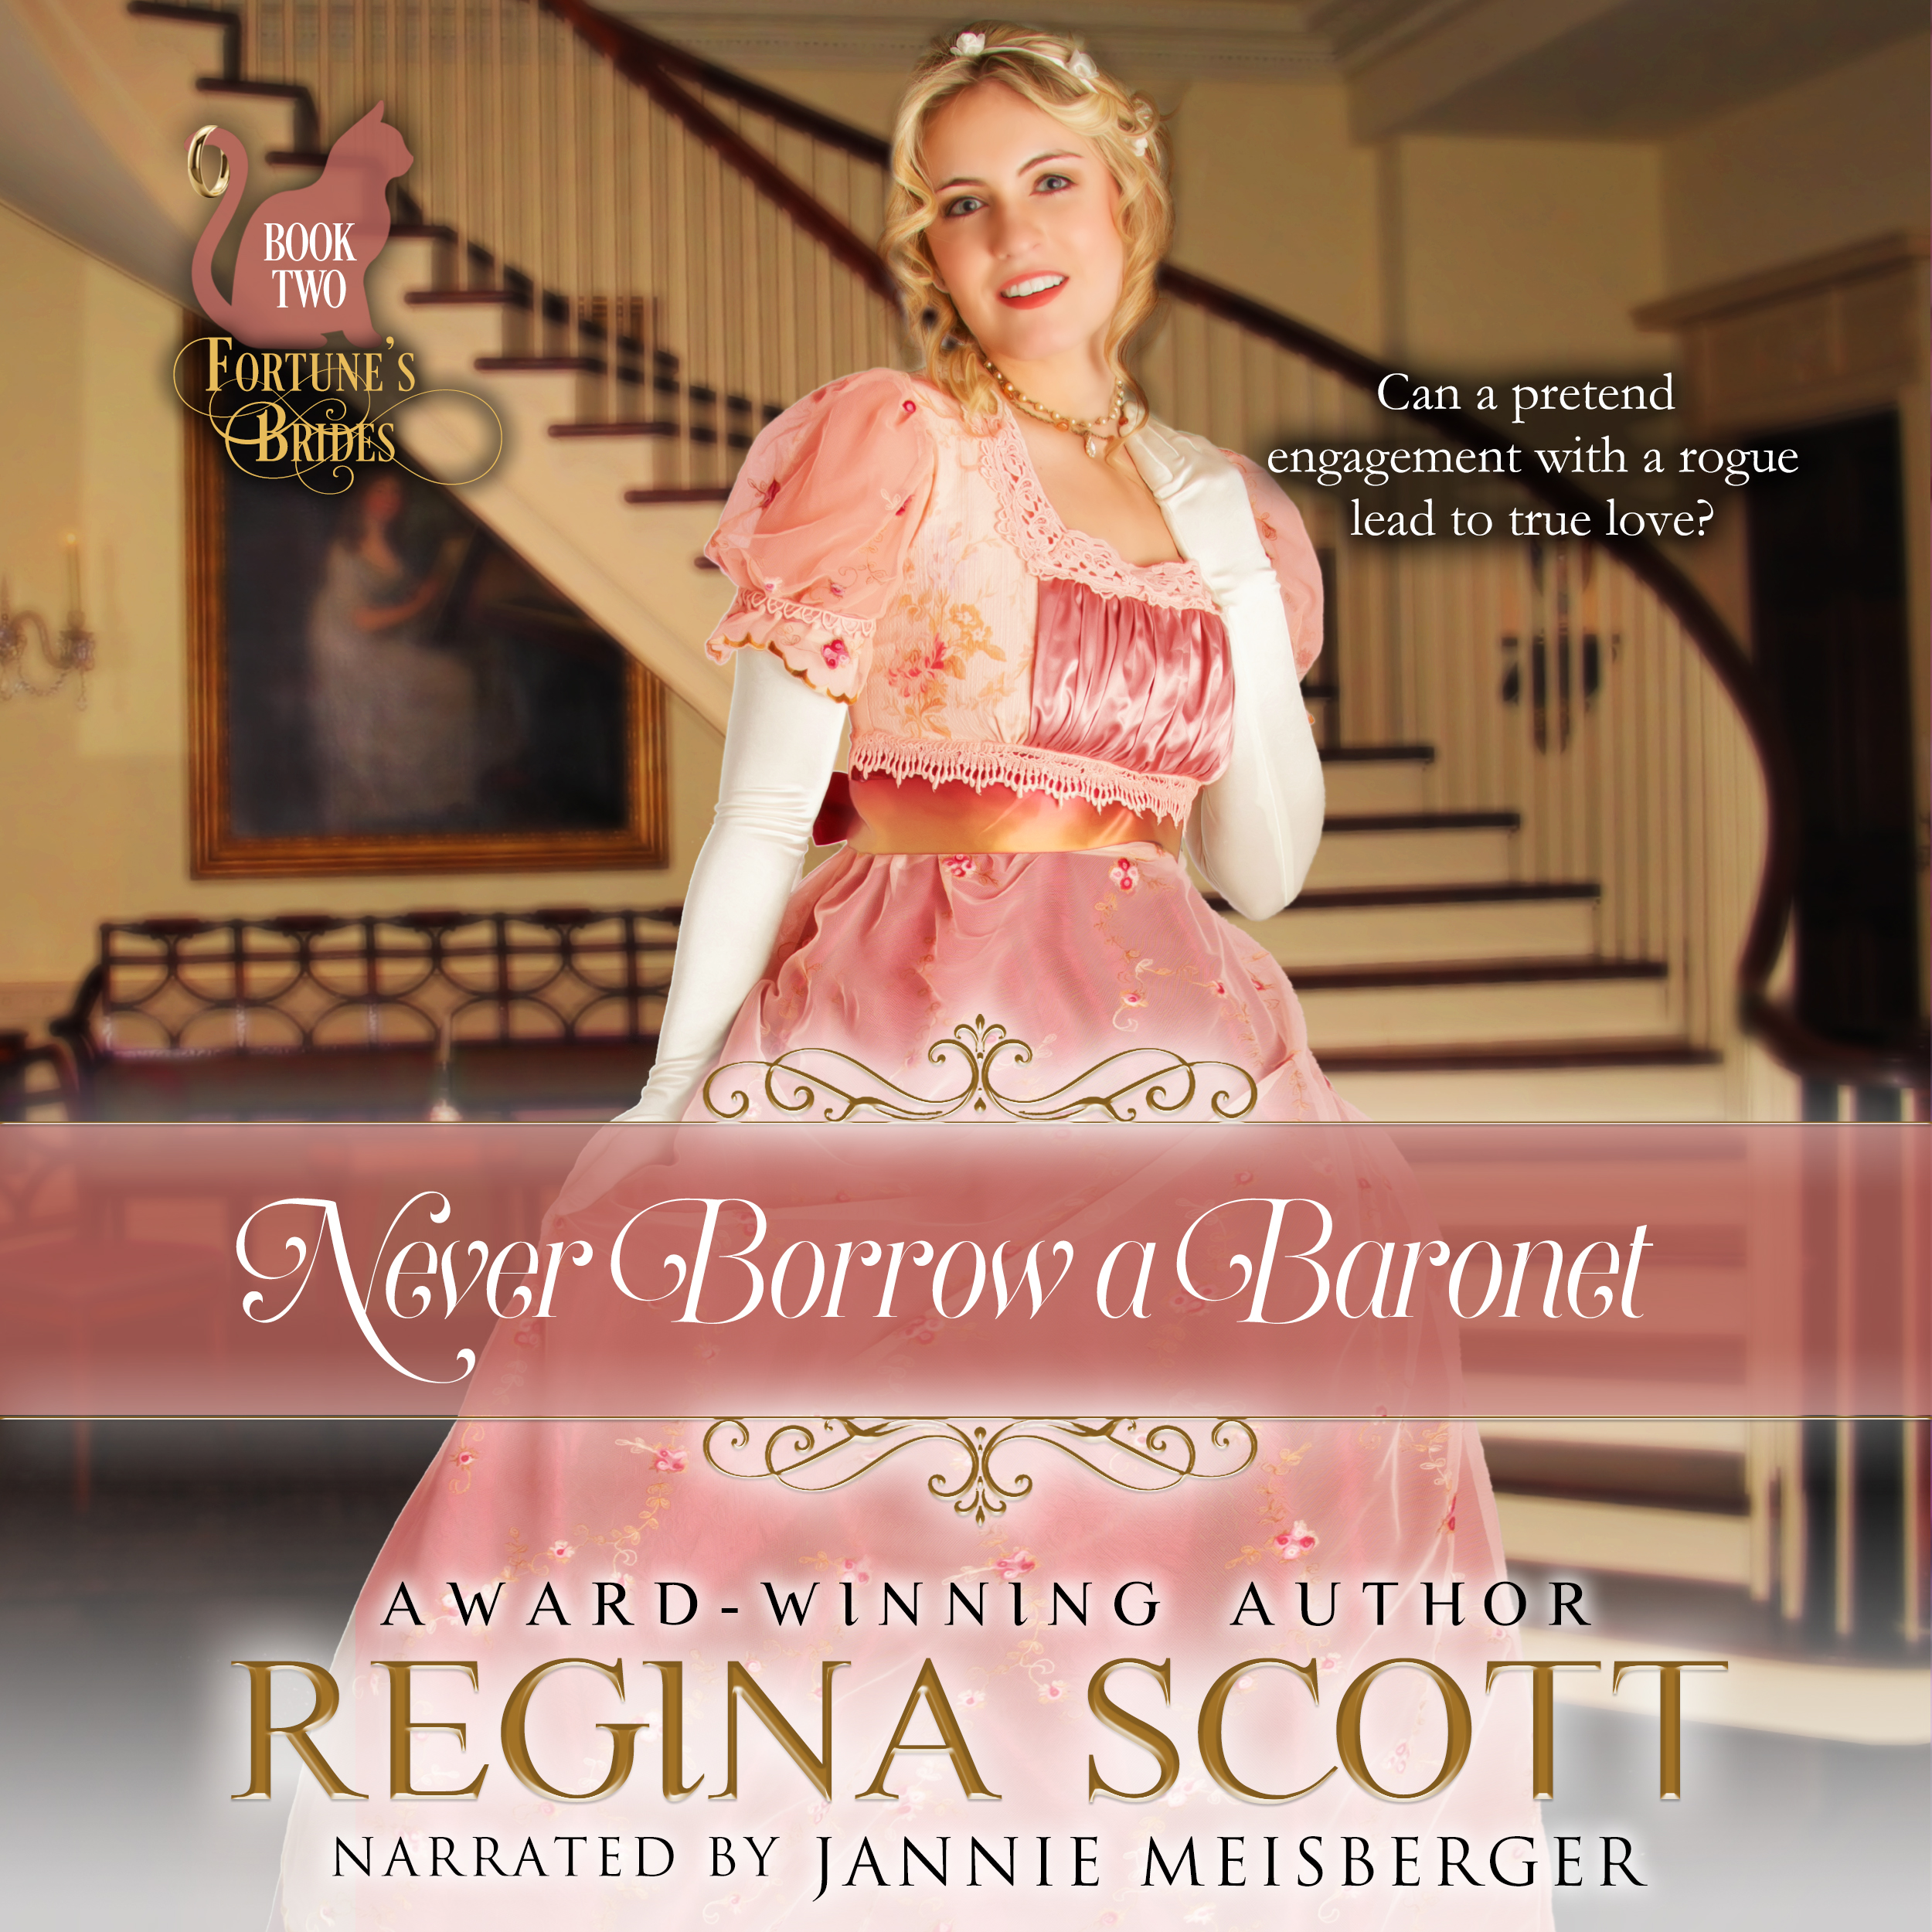 audio book for Never Borrow a Baronet by Regina Scott, book 2 in the Fortune's Brides series